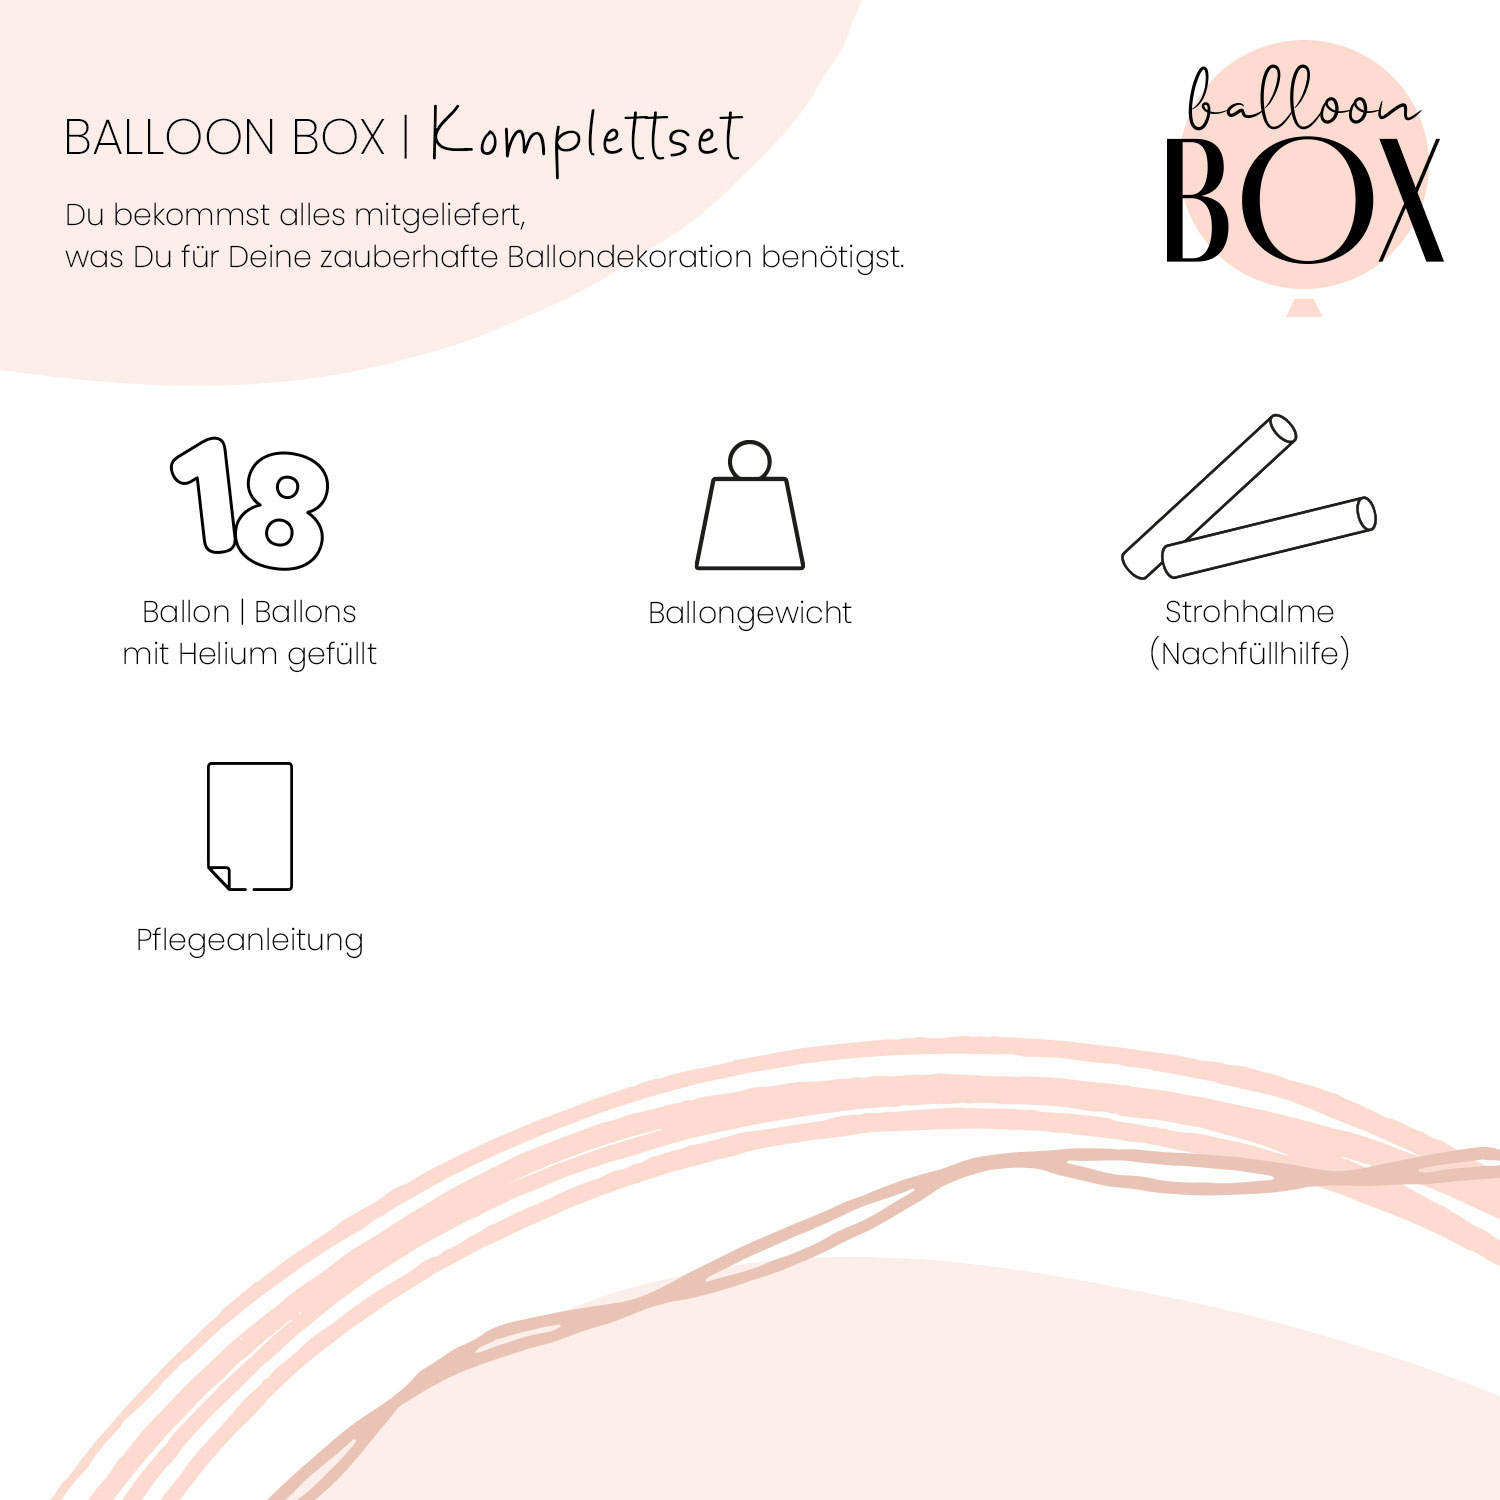 Heliumballon in a Box - Pink Eighteen